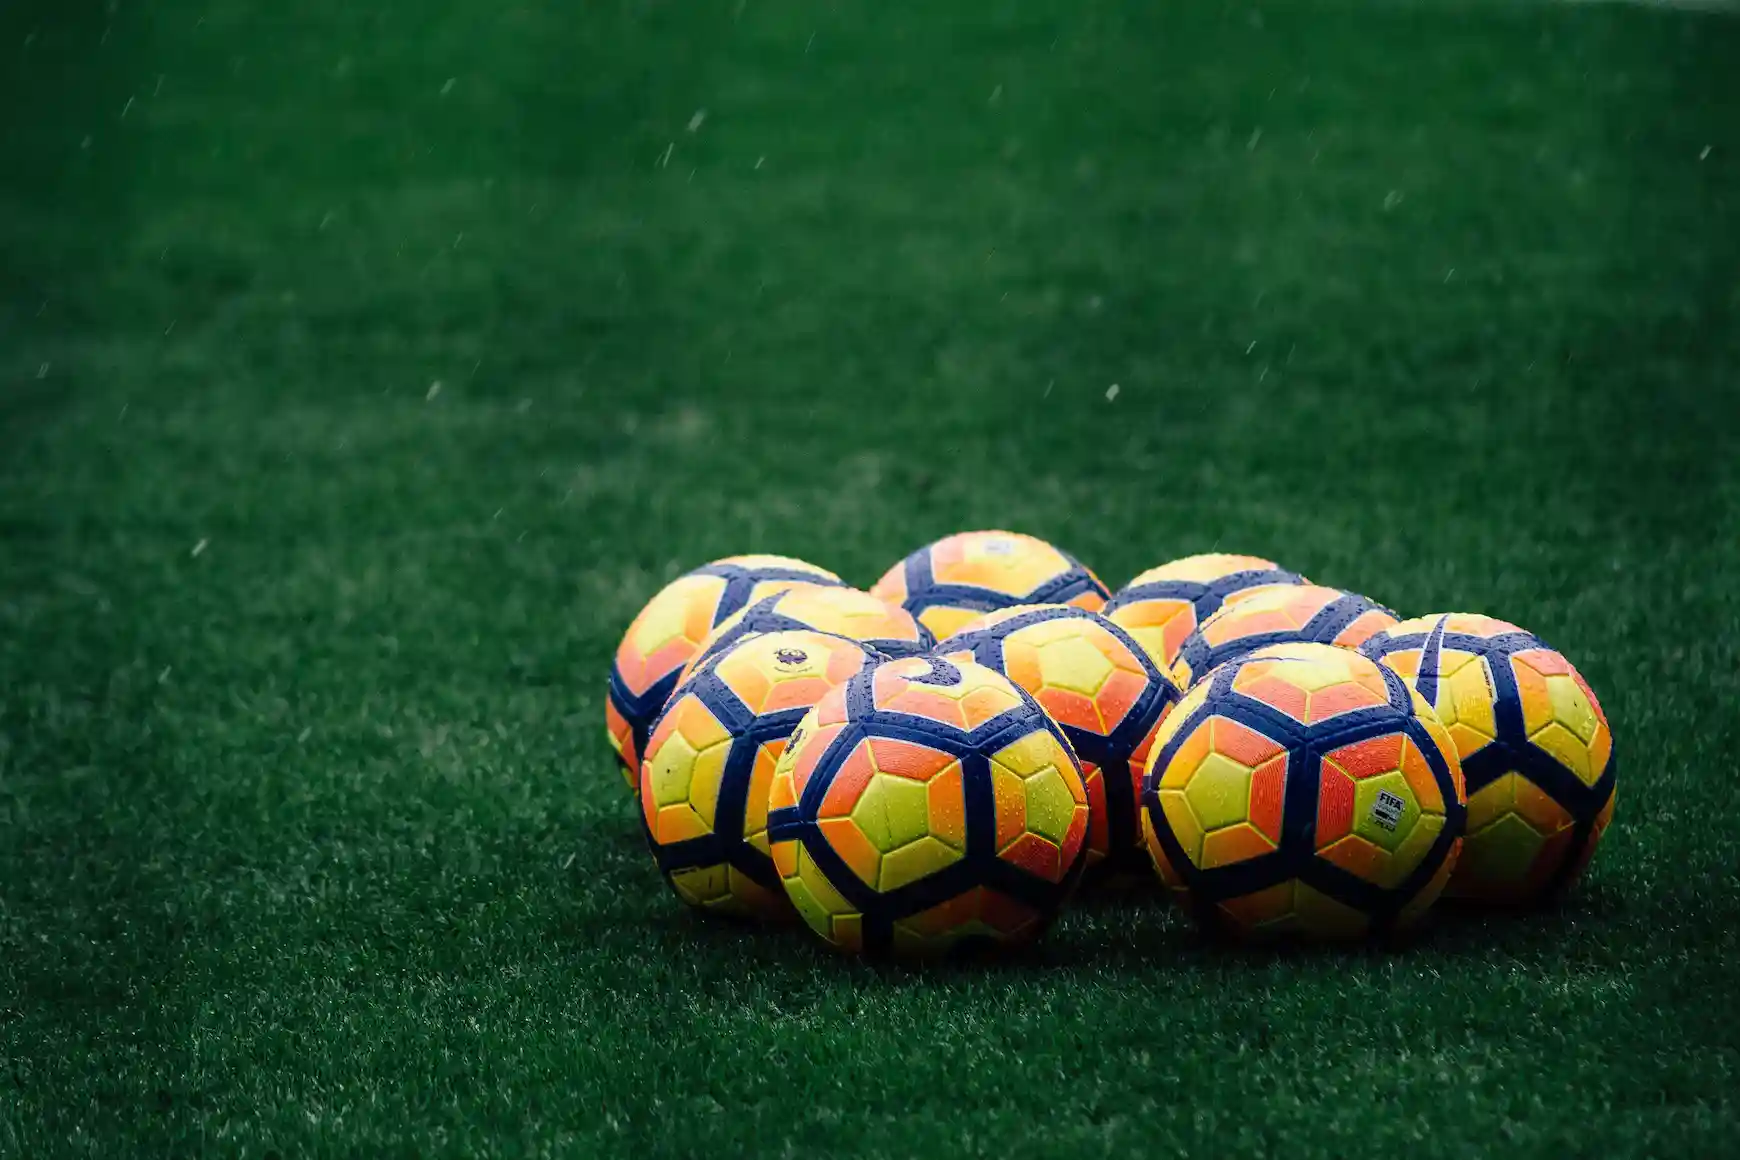 9 nike premier league balls sitting on a green grass in the rain